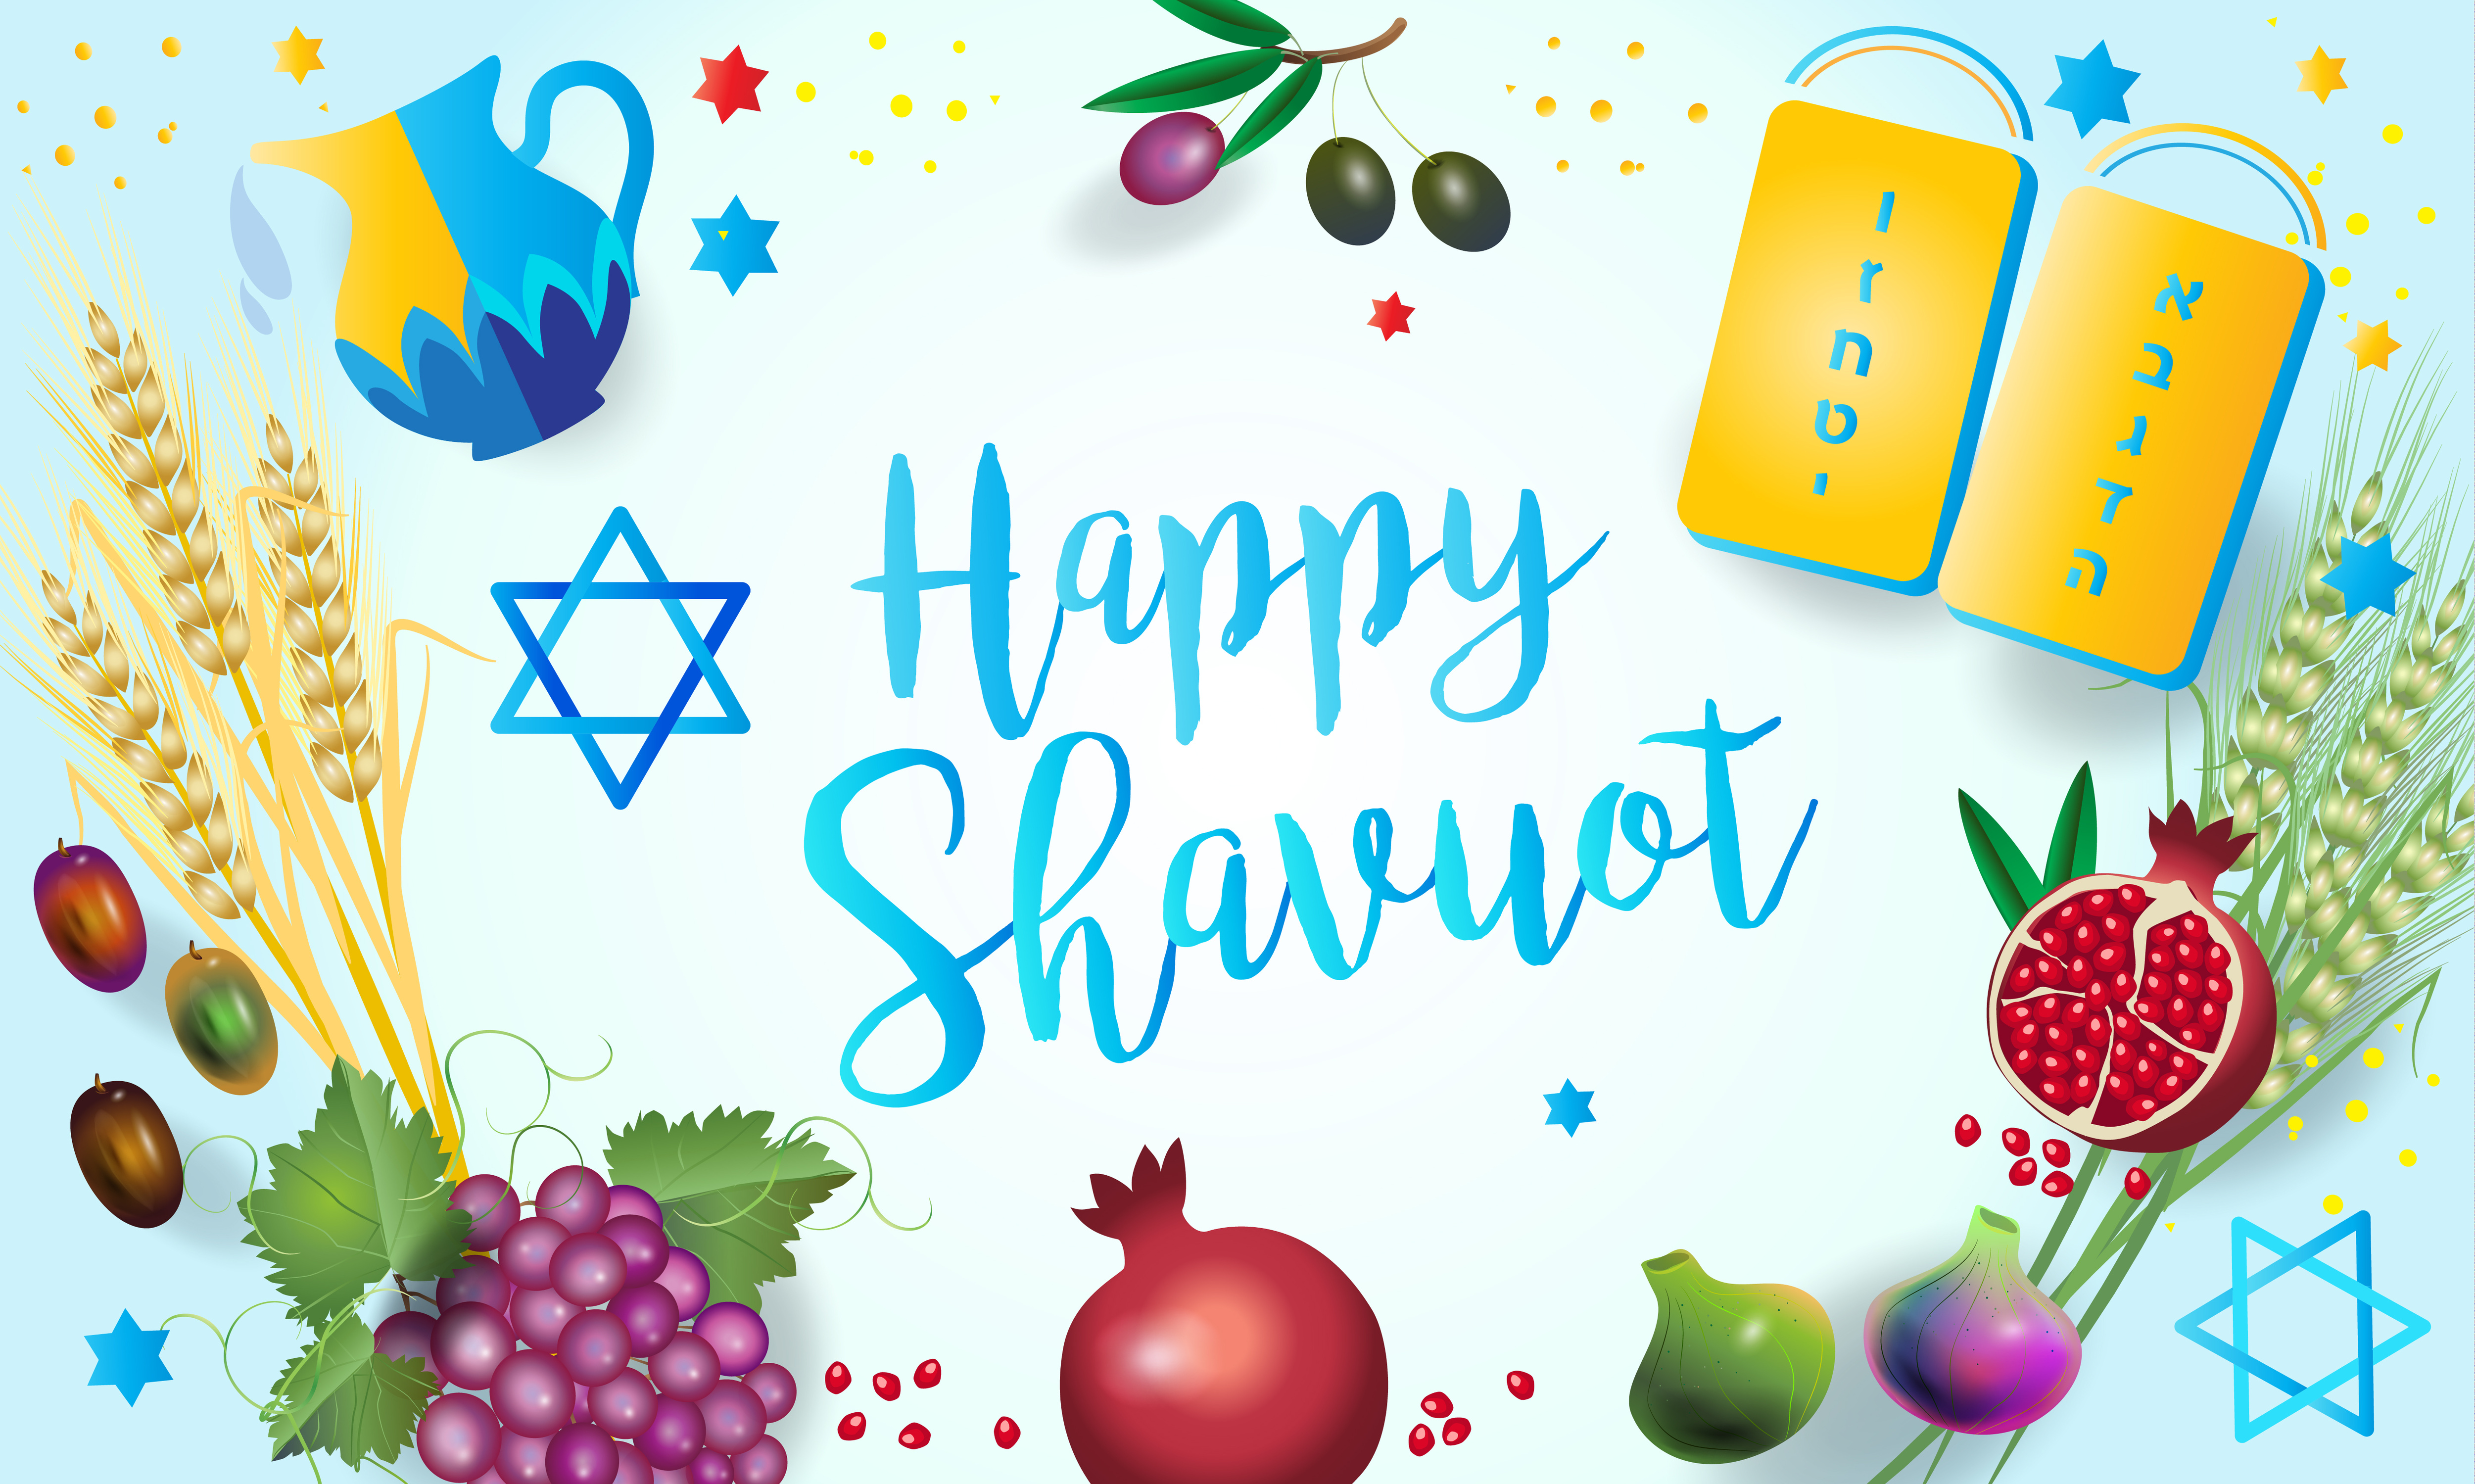 A decorative image saying "Happy Shavout."